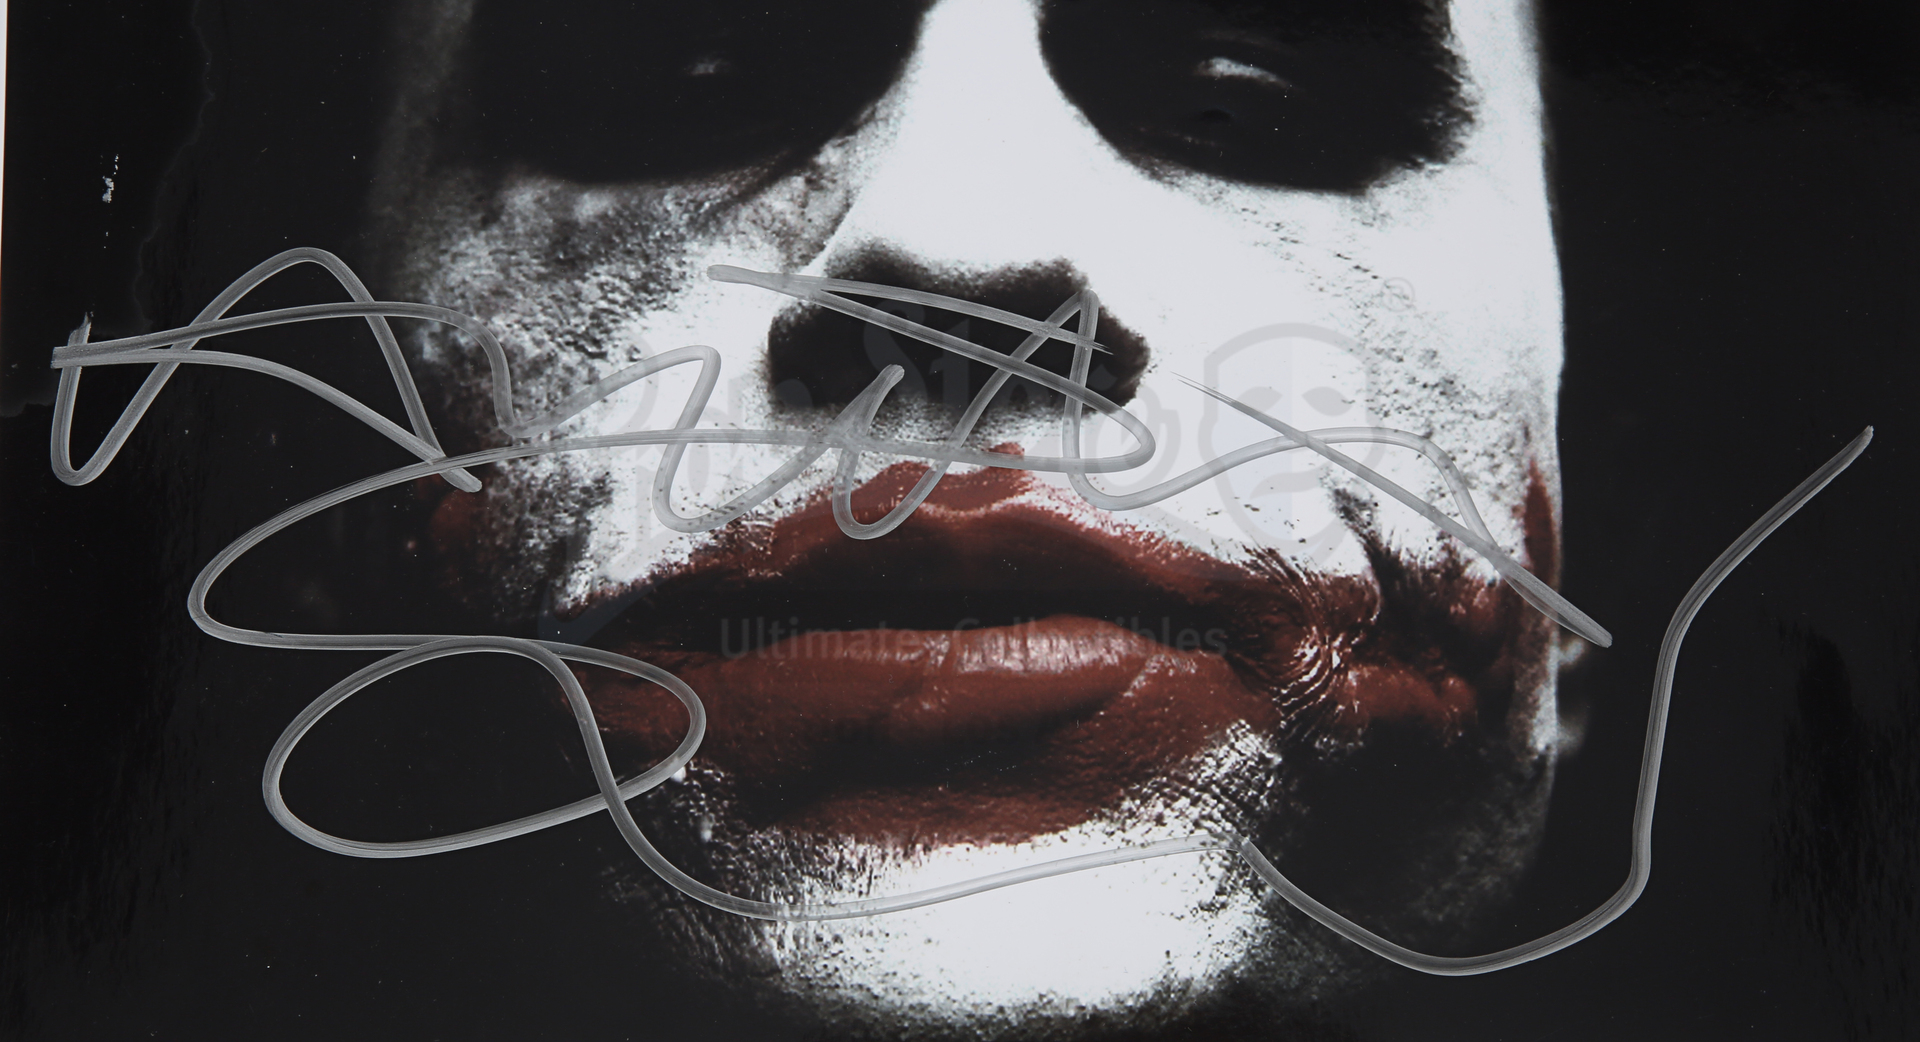 THE DARK KNIGHT (2008) - Heath Ledger 'Joker' Autographed Photo - Image 2 of 4